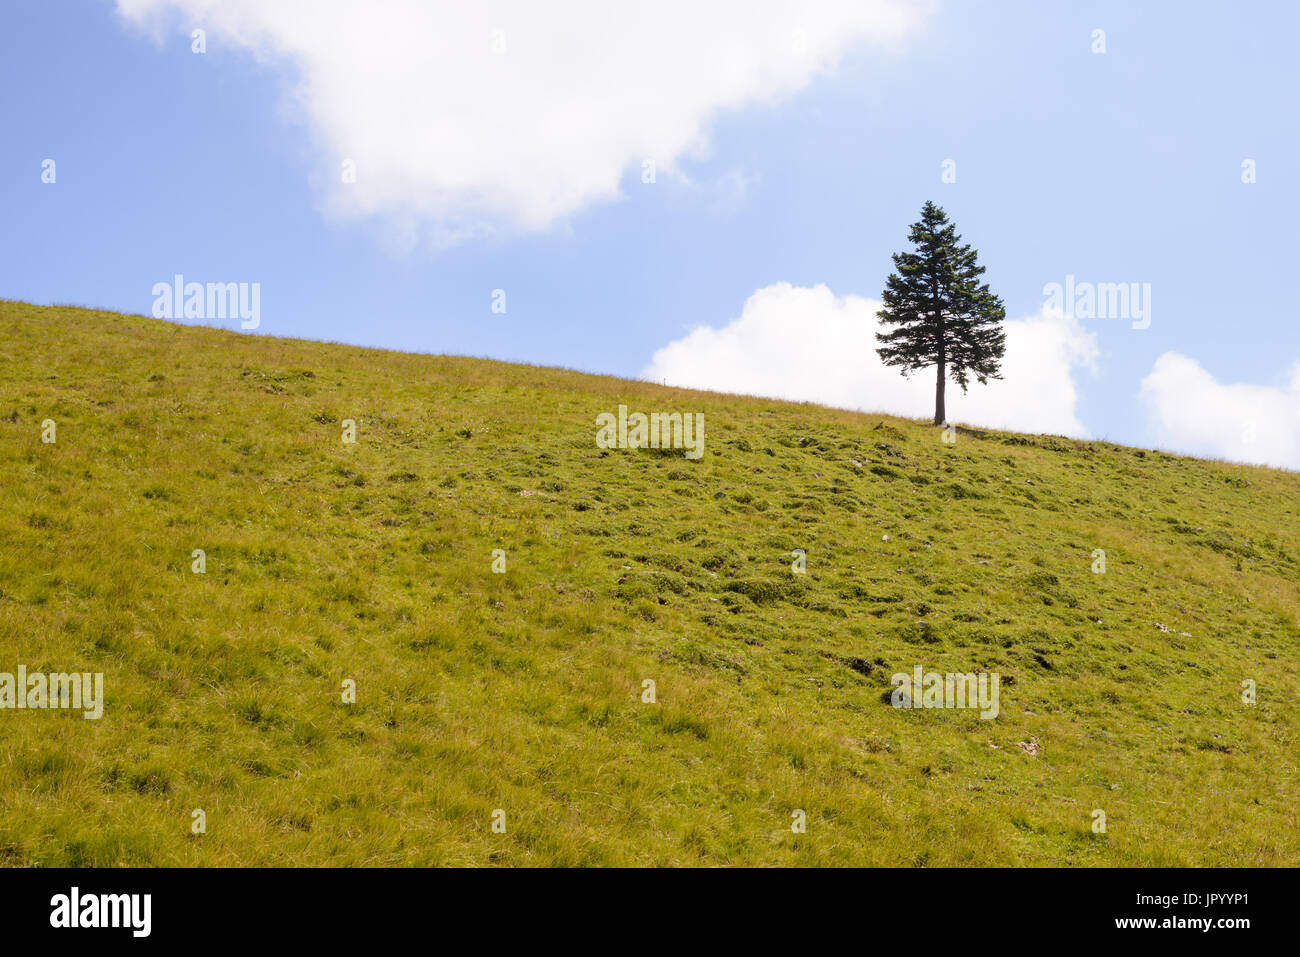 Single pine tree in mountains on horizon, Alpine landscape, Slovenia, Velika planina pasture Stock Photo